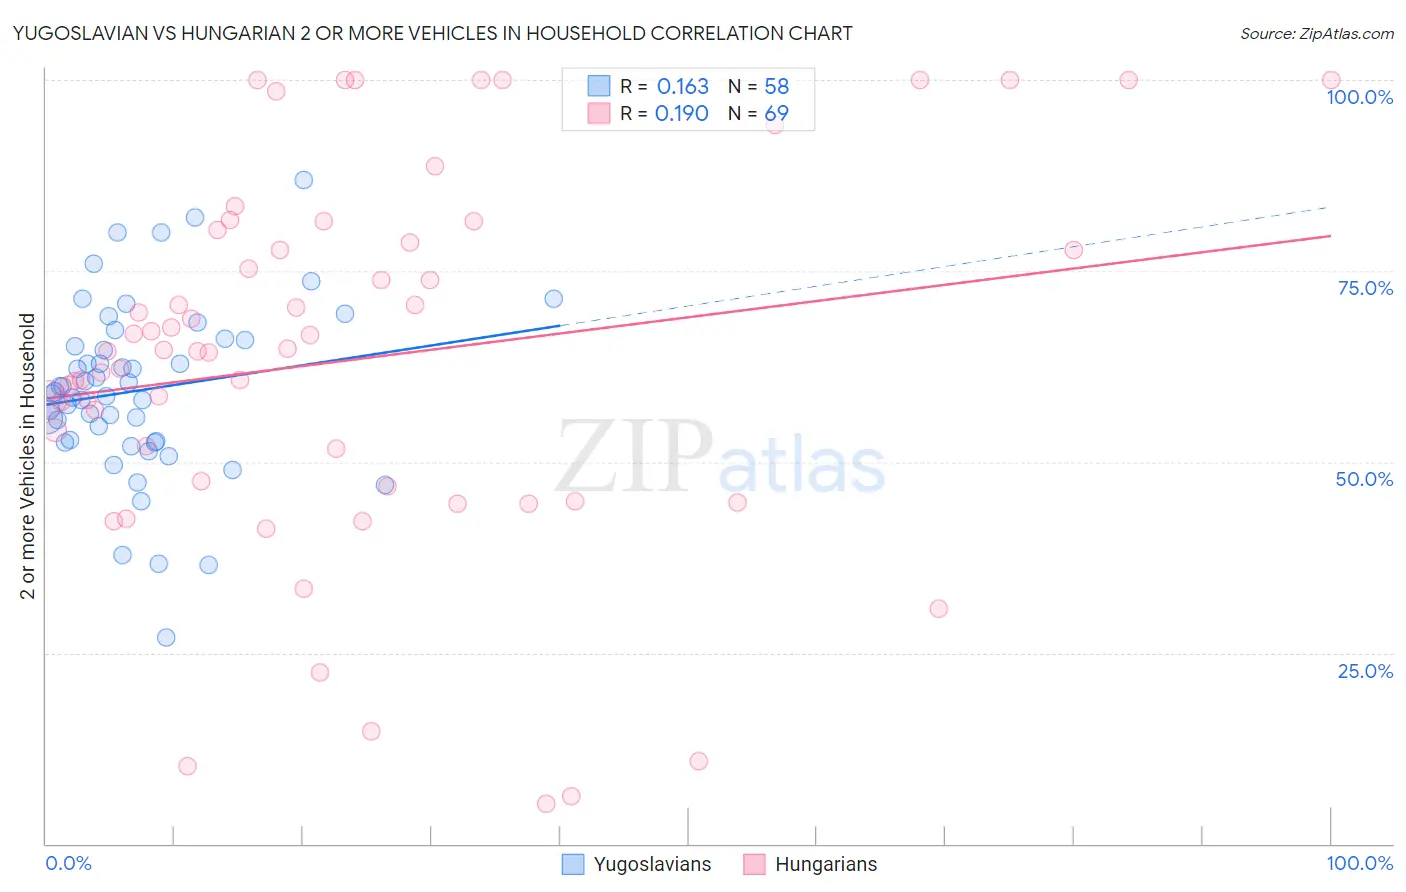 Yugoslavian vs Hungarian 2 or more Vehicles in Household